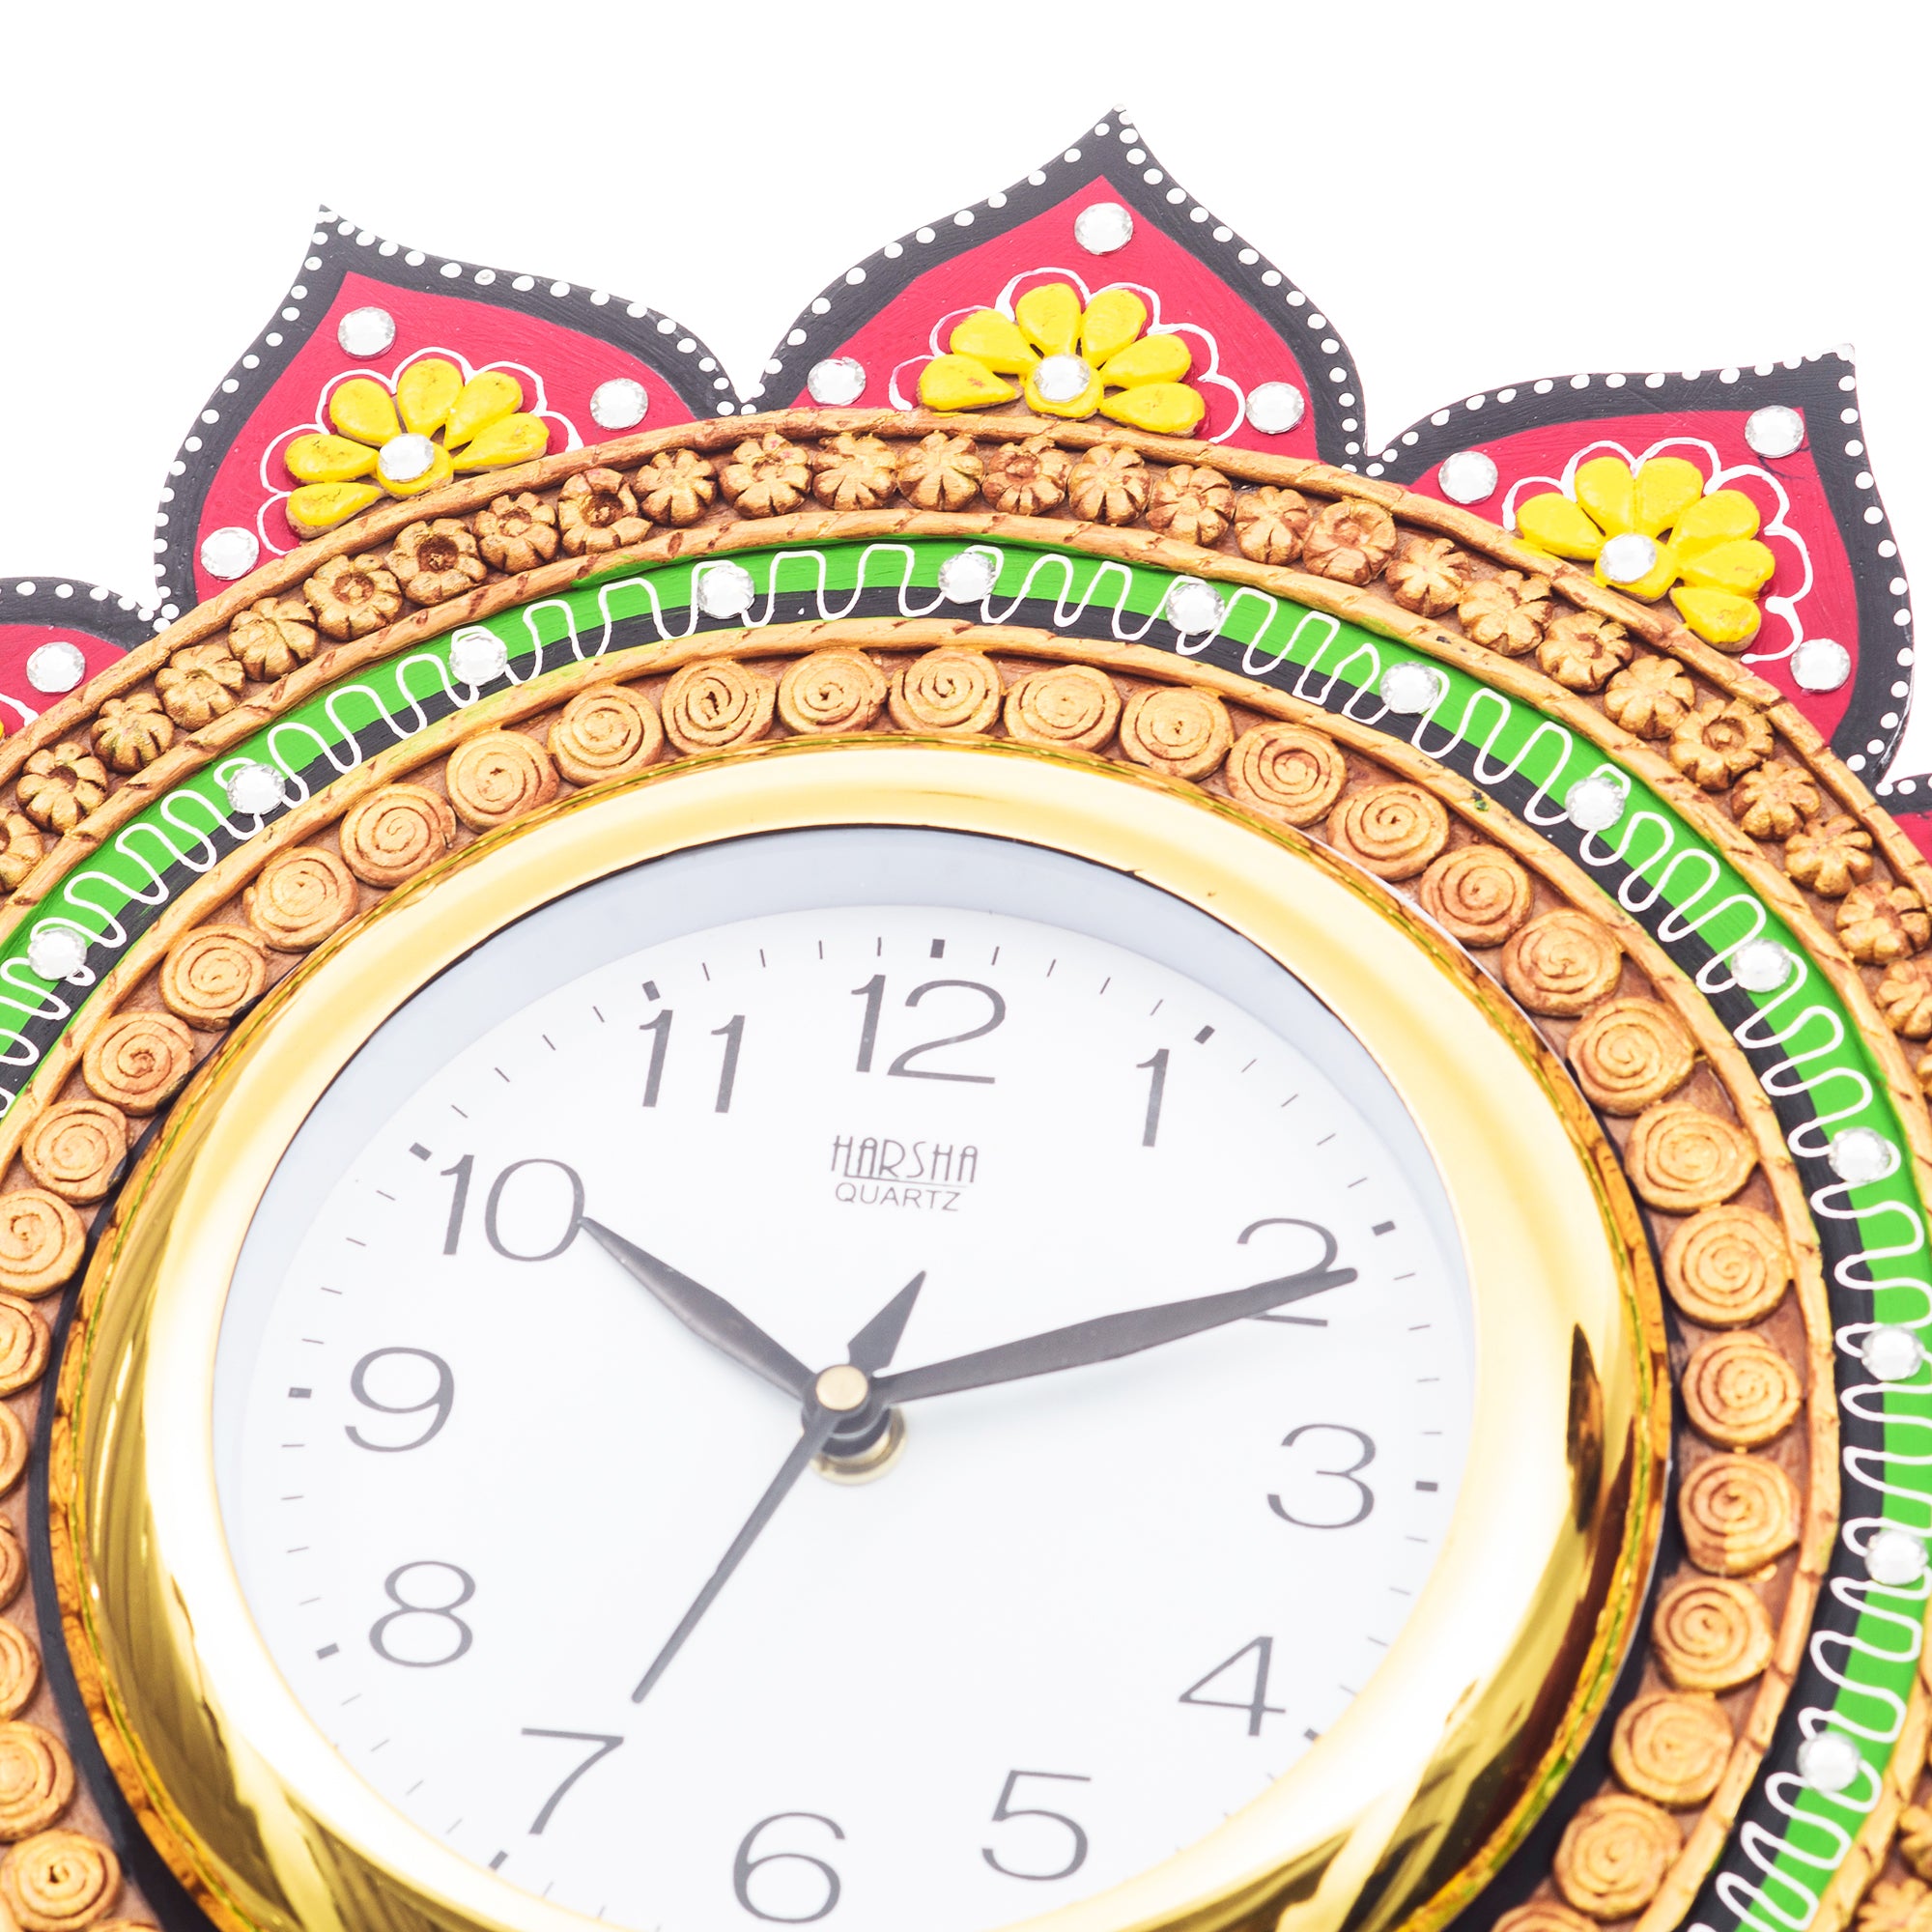 Handicraft Lord Ganesha Analog Wall Clock (Yellow & Green, With Glass) 4